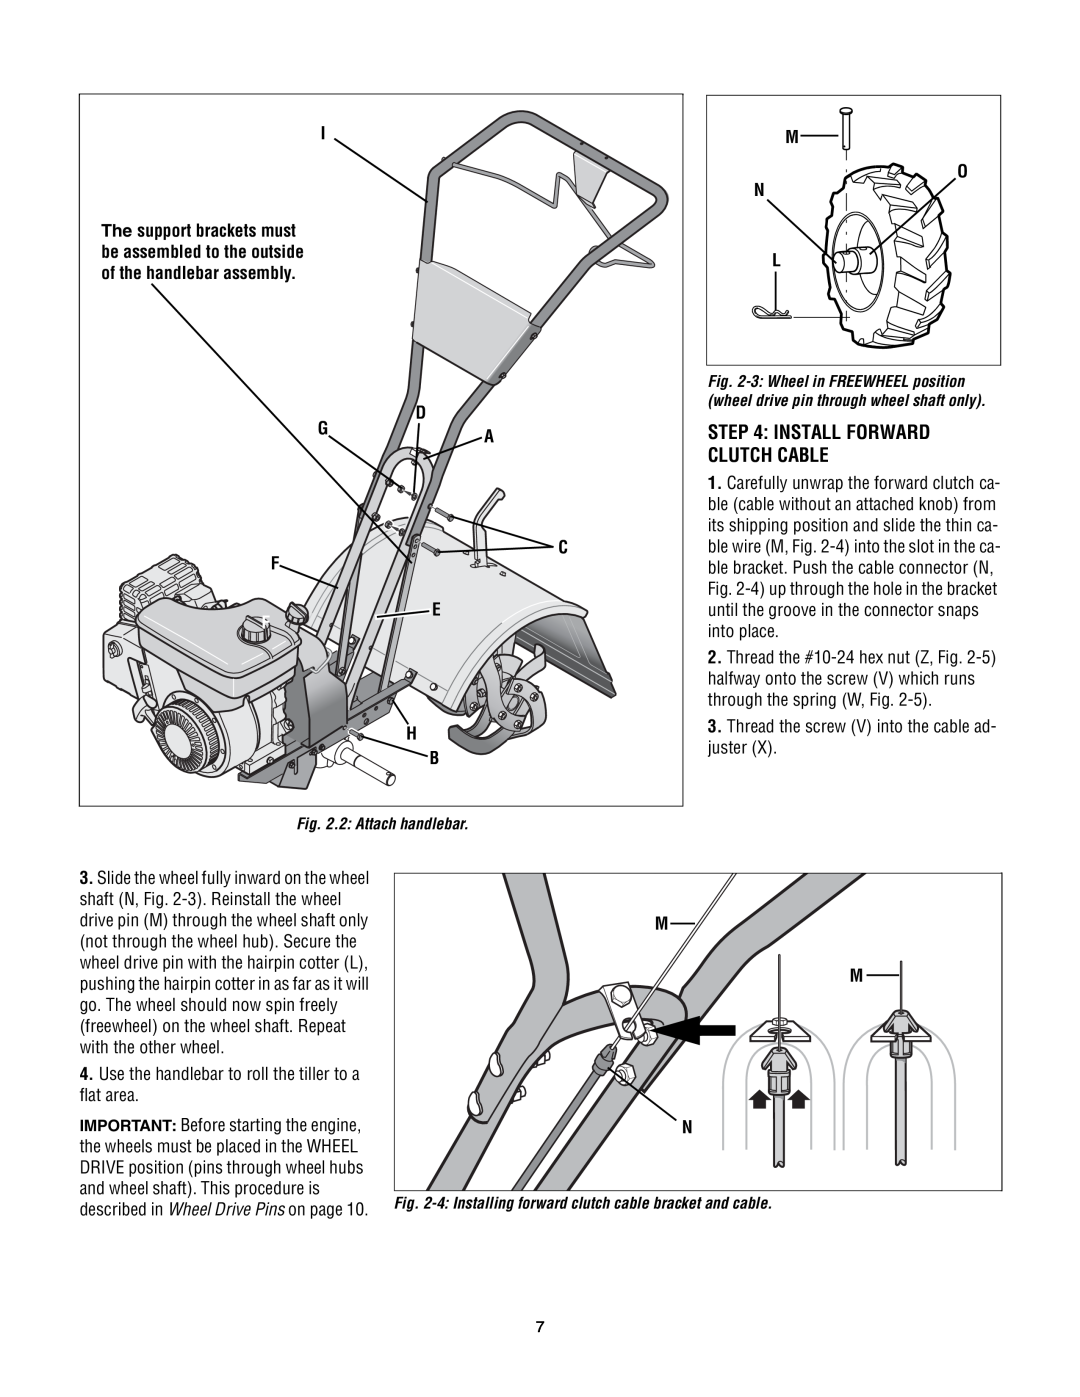 Troy-Bilt 643B Super Bronco manual D G F E, Install Forward Clutch Cable, M M N, 2 Attach handlebar 